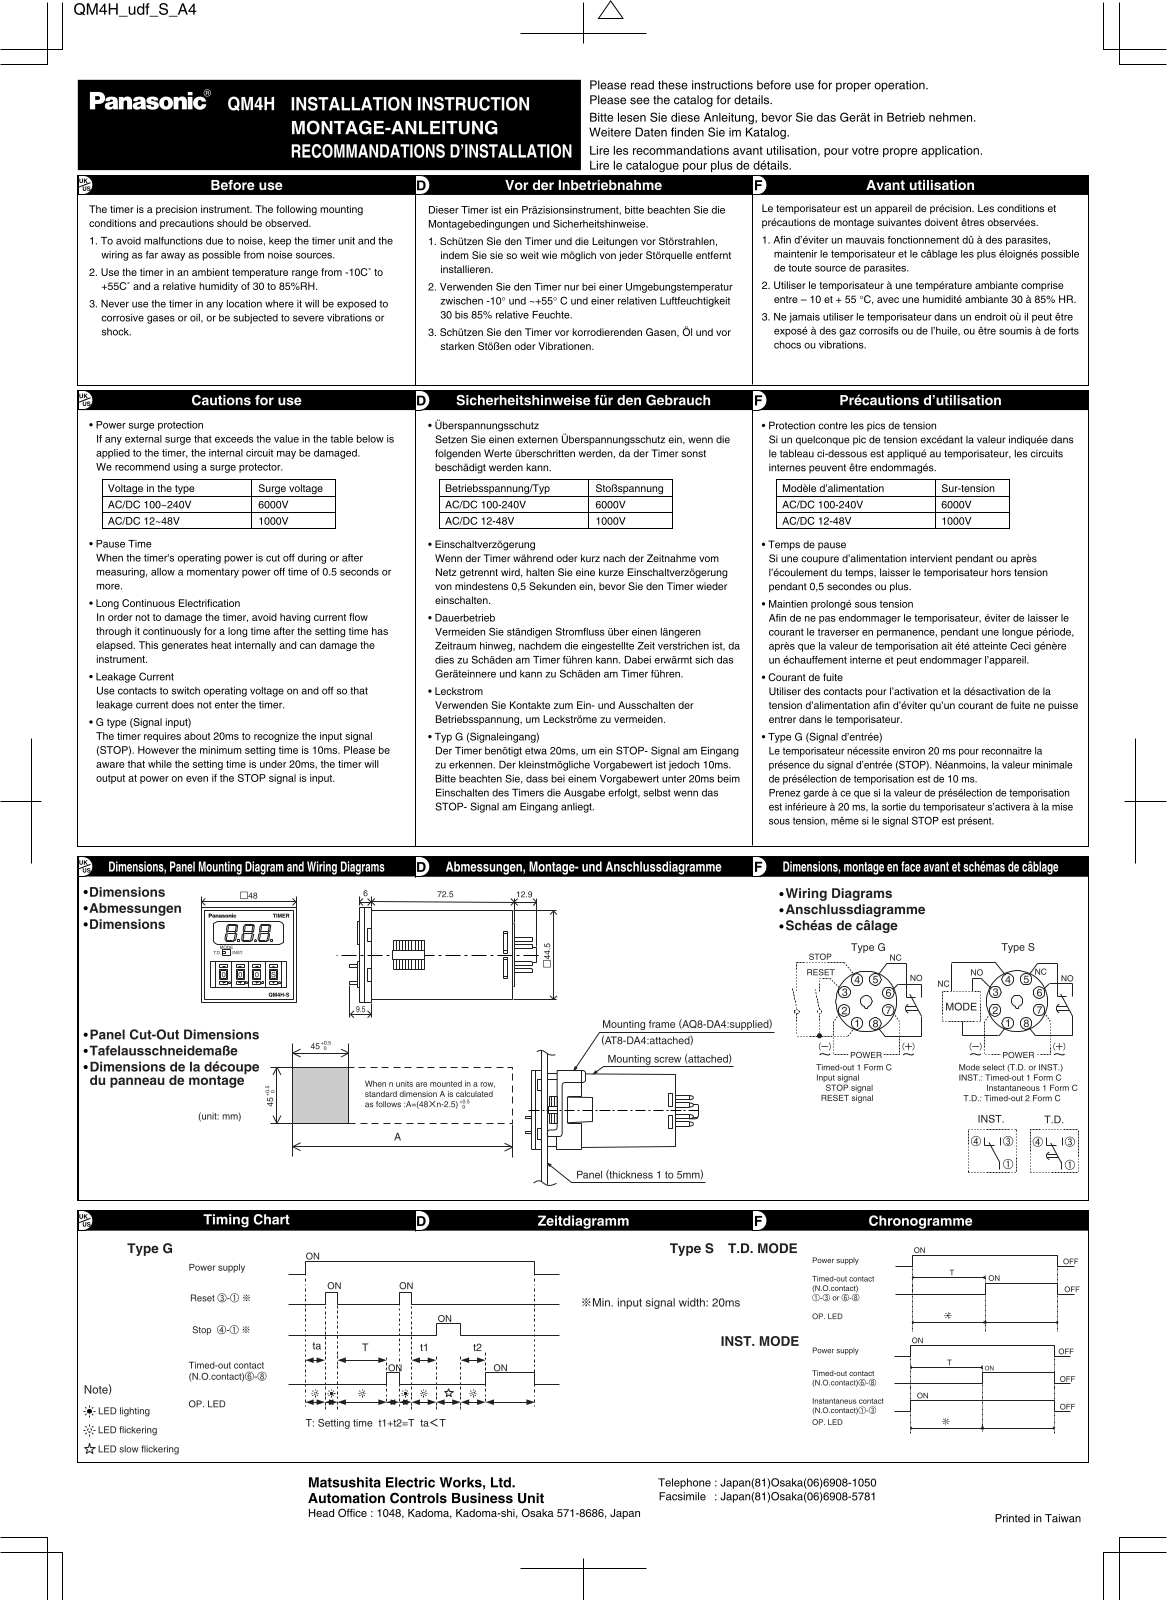 Panasonic QM4H Installation Manual